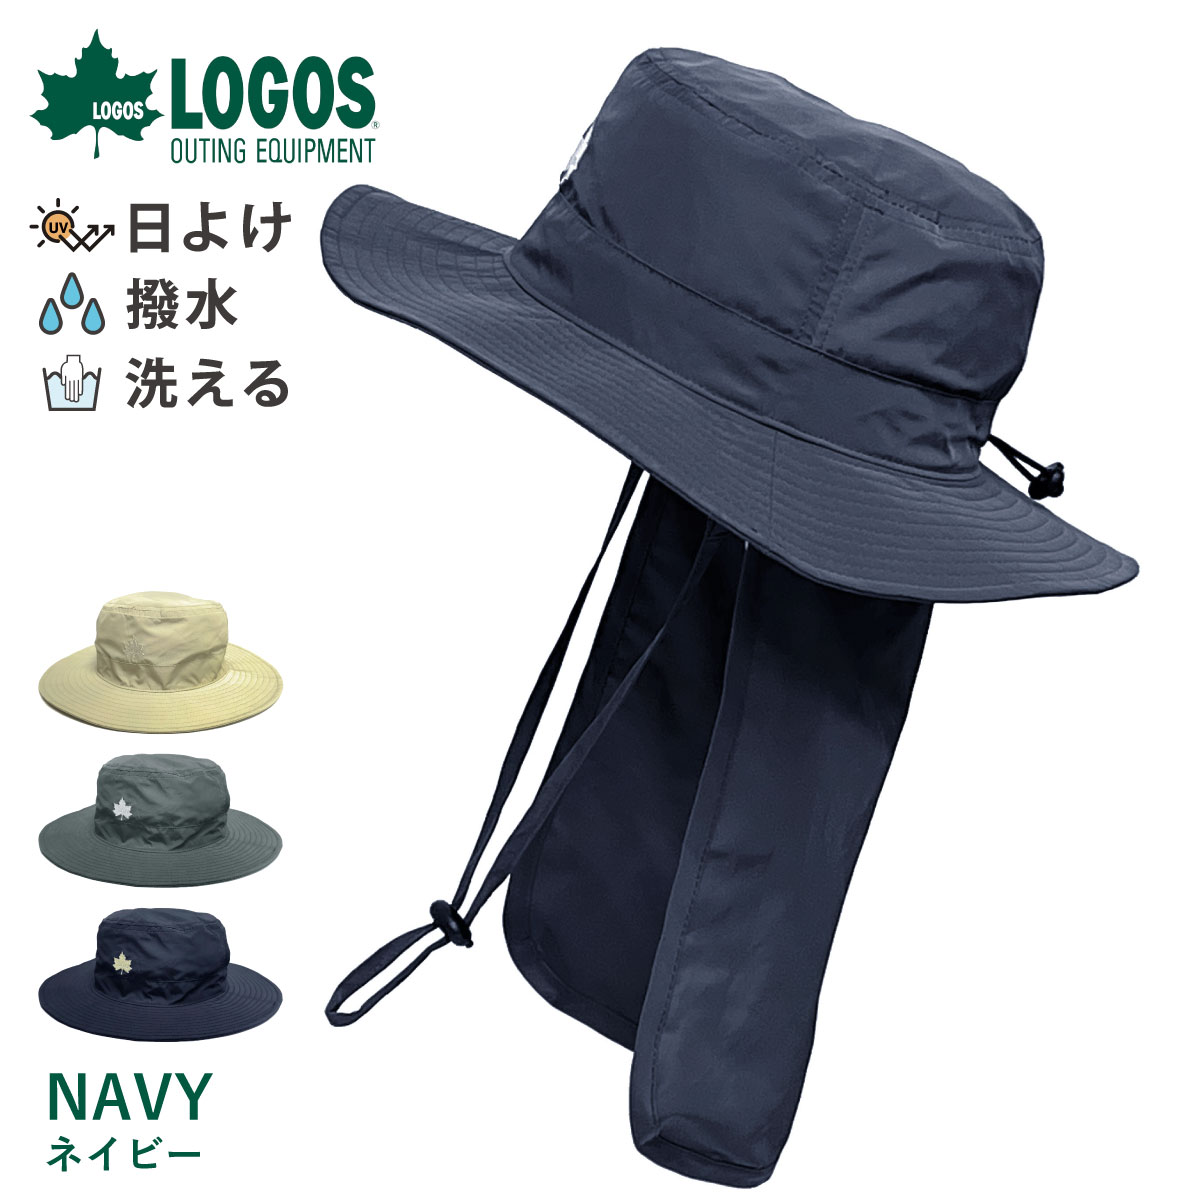 LOGOS 撥水サファリハット 帽子 シェード 超軽量 アドベンチャーハット 58cm hat-15...